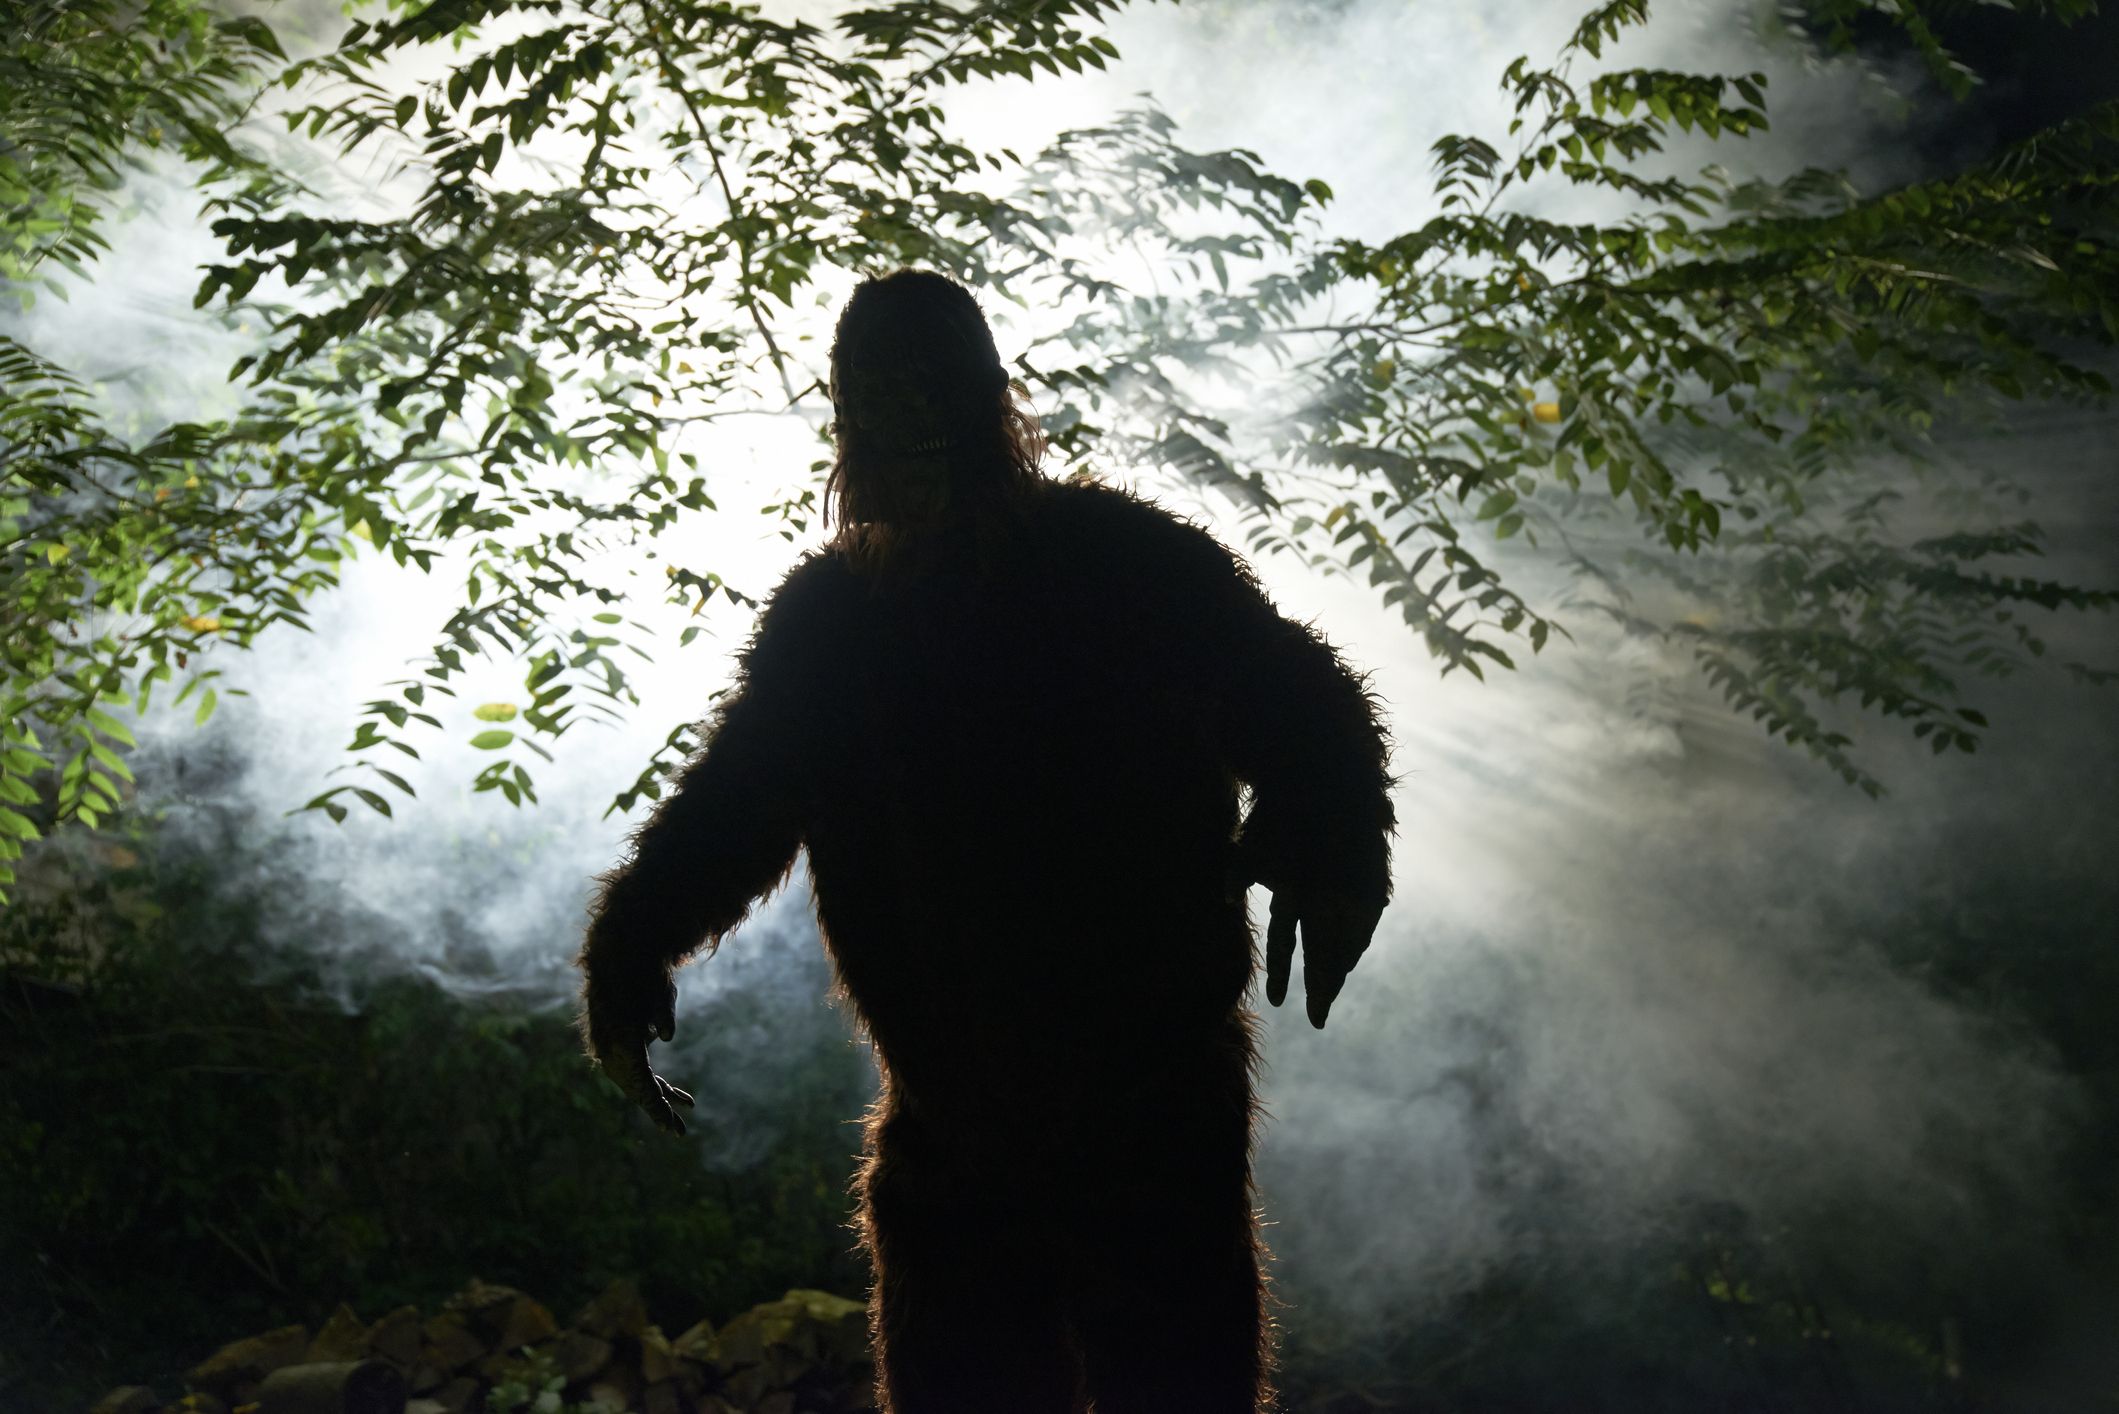 Bigfoot Lover's Guide to Oregon - Travel Oregon